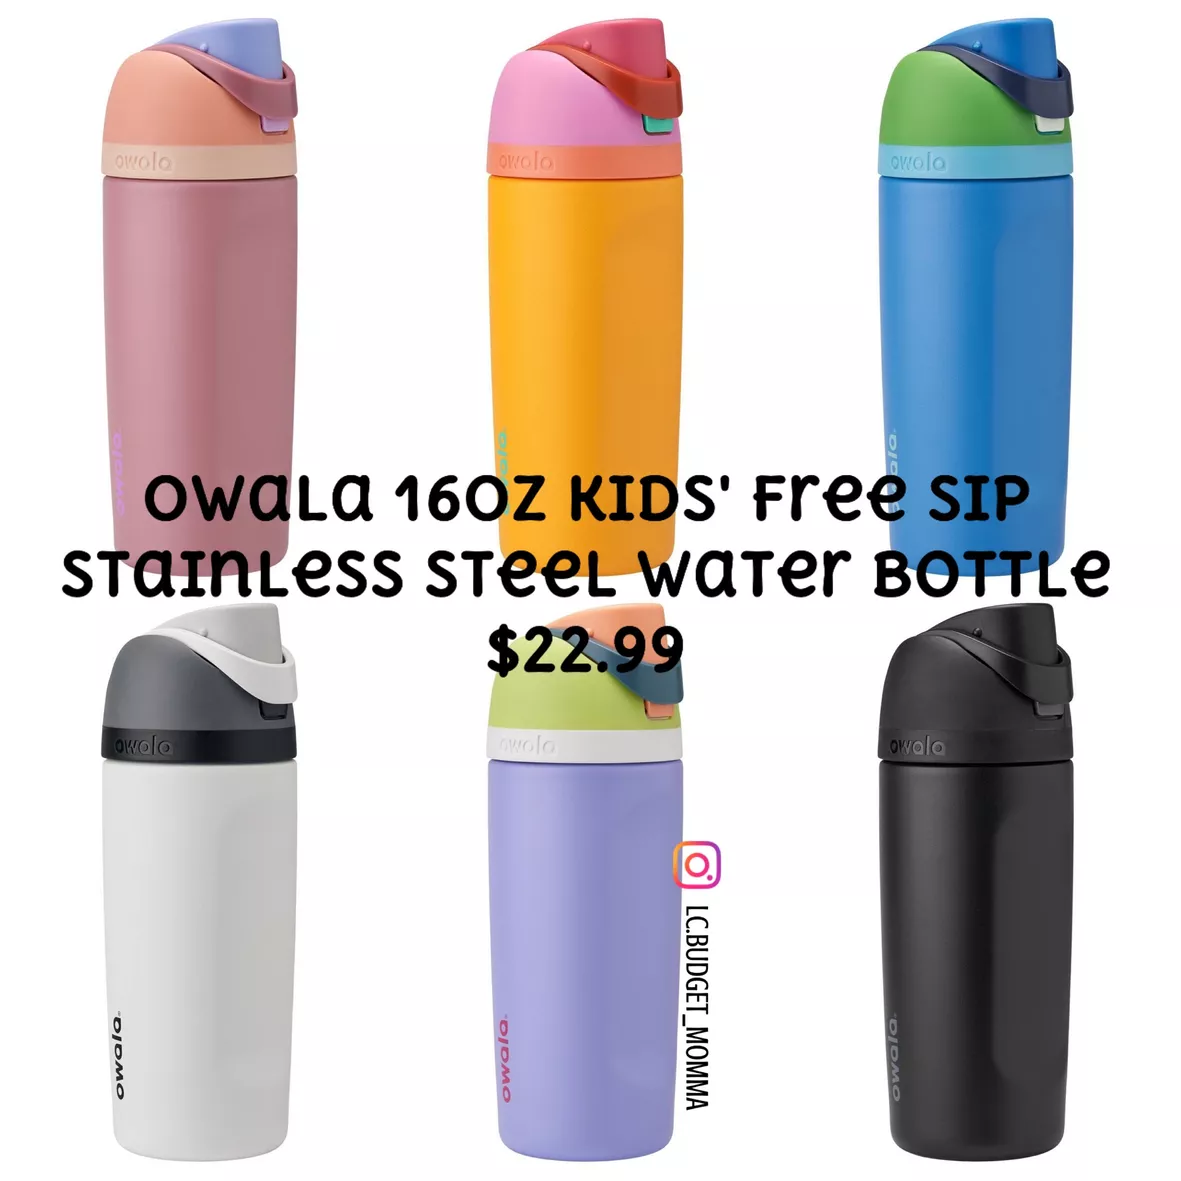 Owala 16oz Kids' Free Sip Stainless Steel Water Bottle - Black